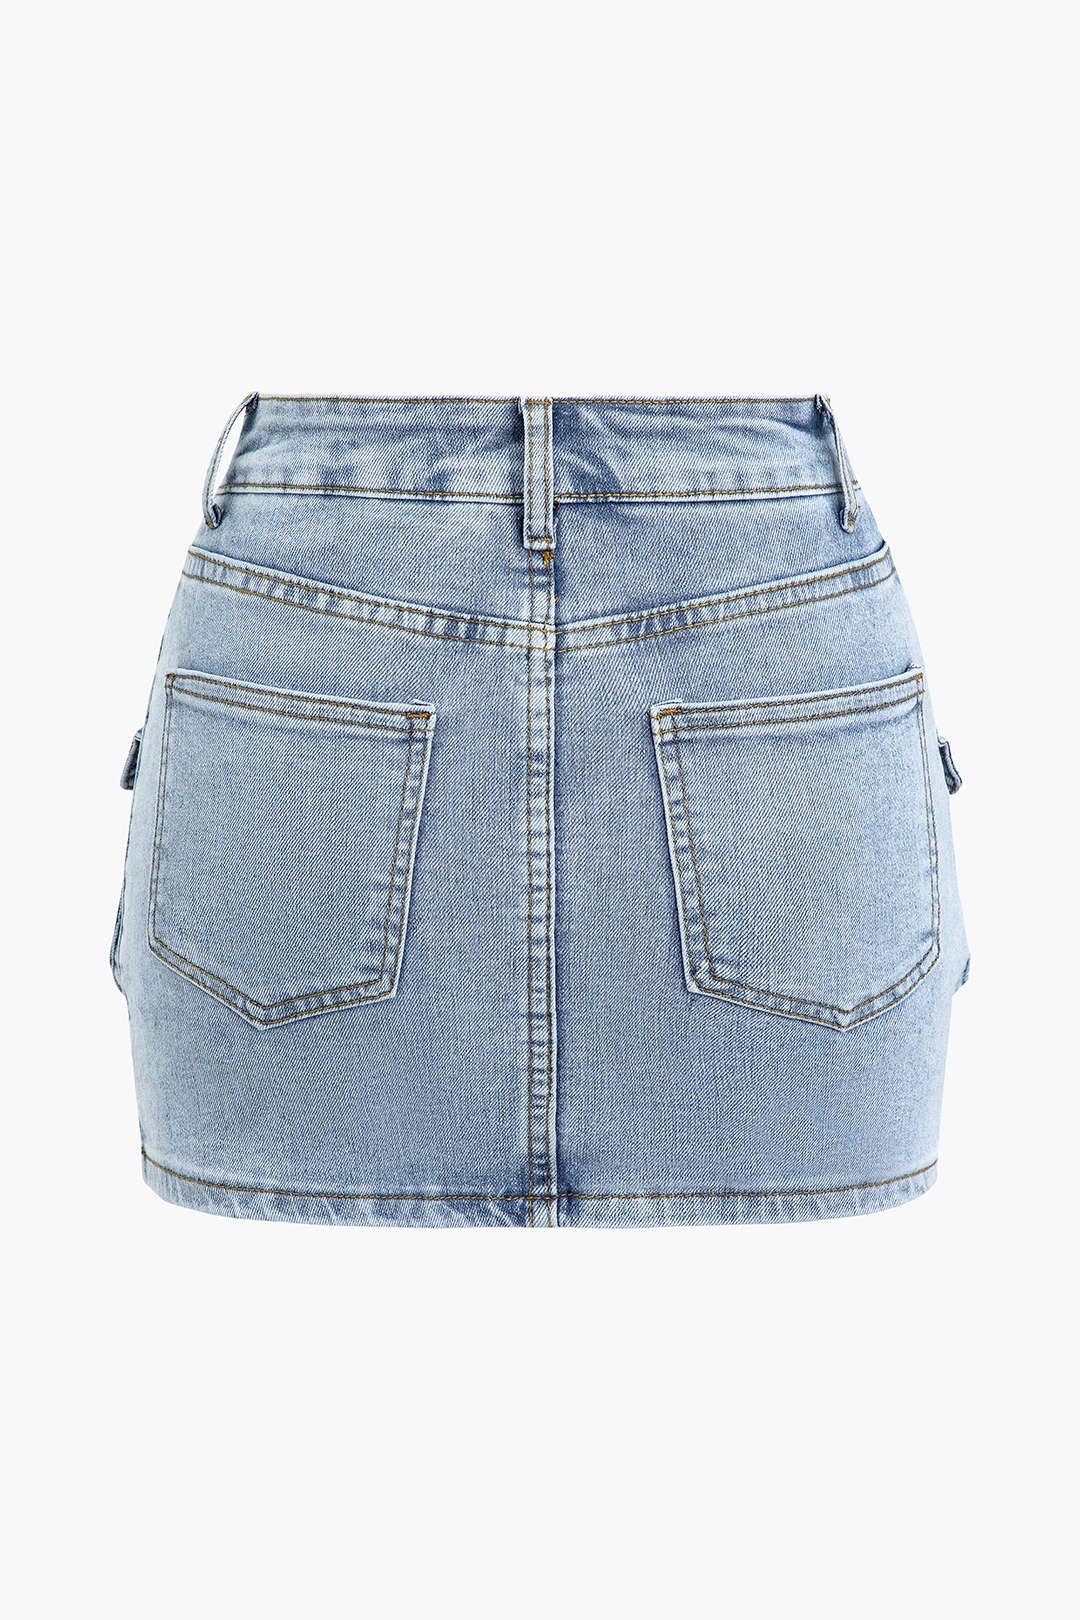 Buckle Flap Pocket Denim Cargo Mini Skirt